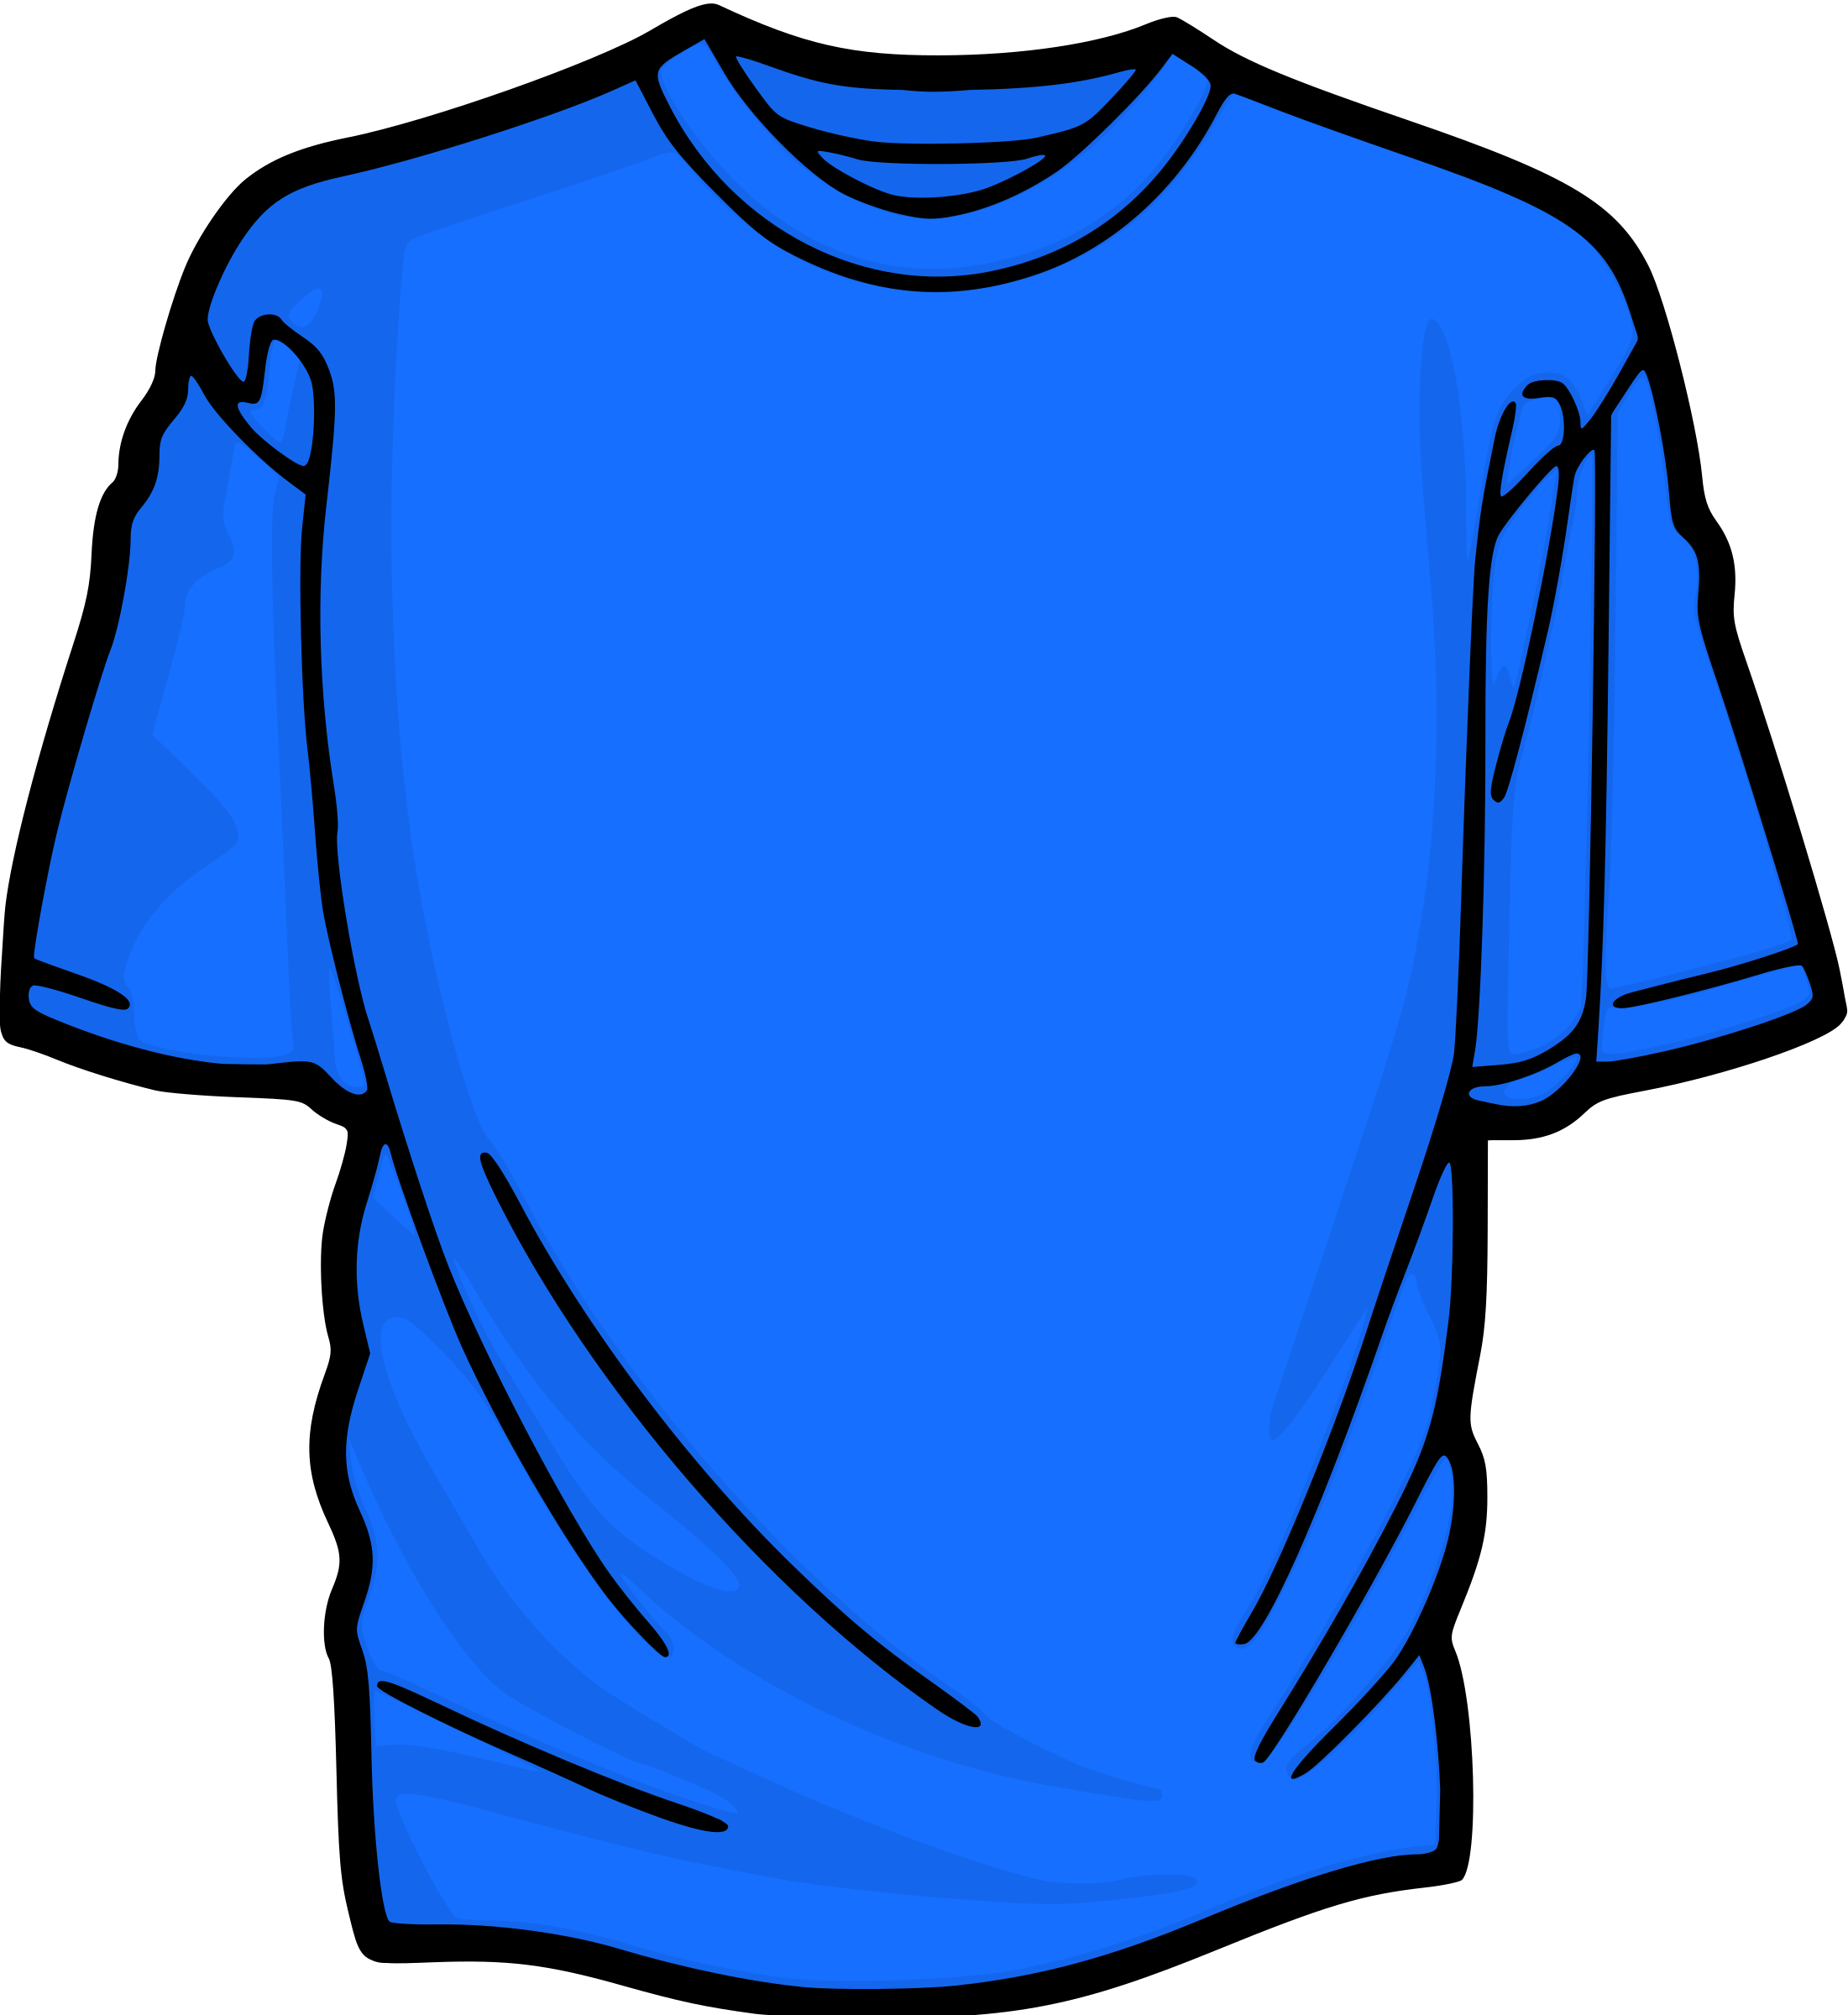 Azure big image png. Shirt clipart t shirt